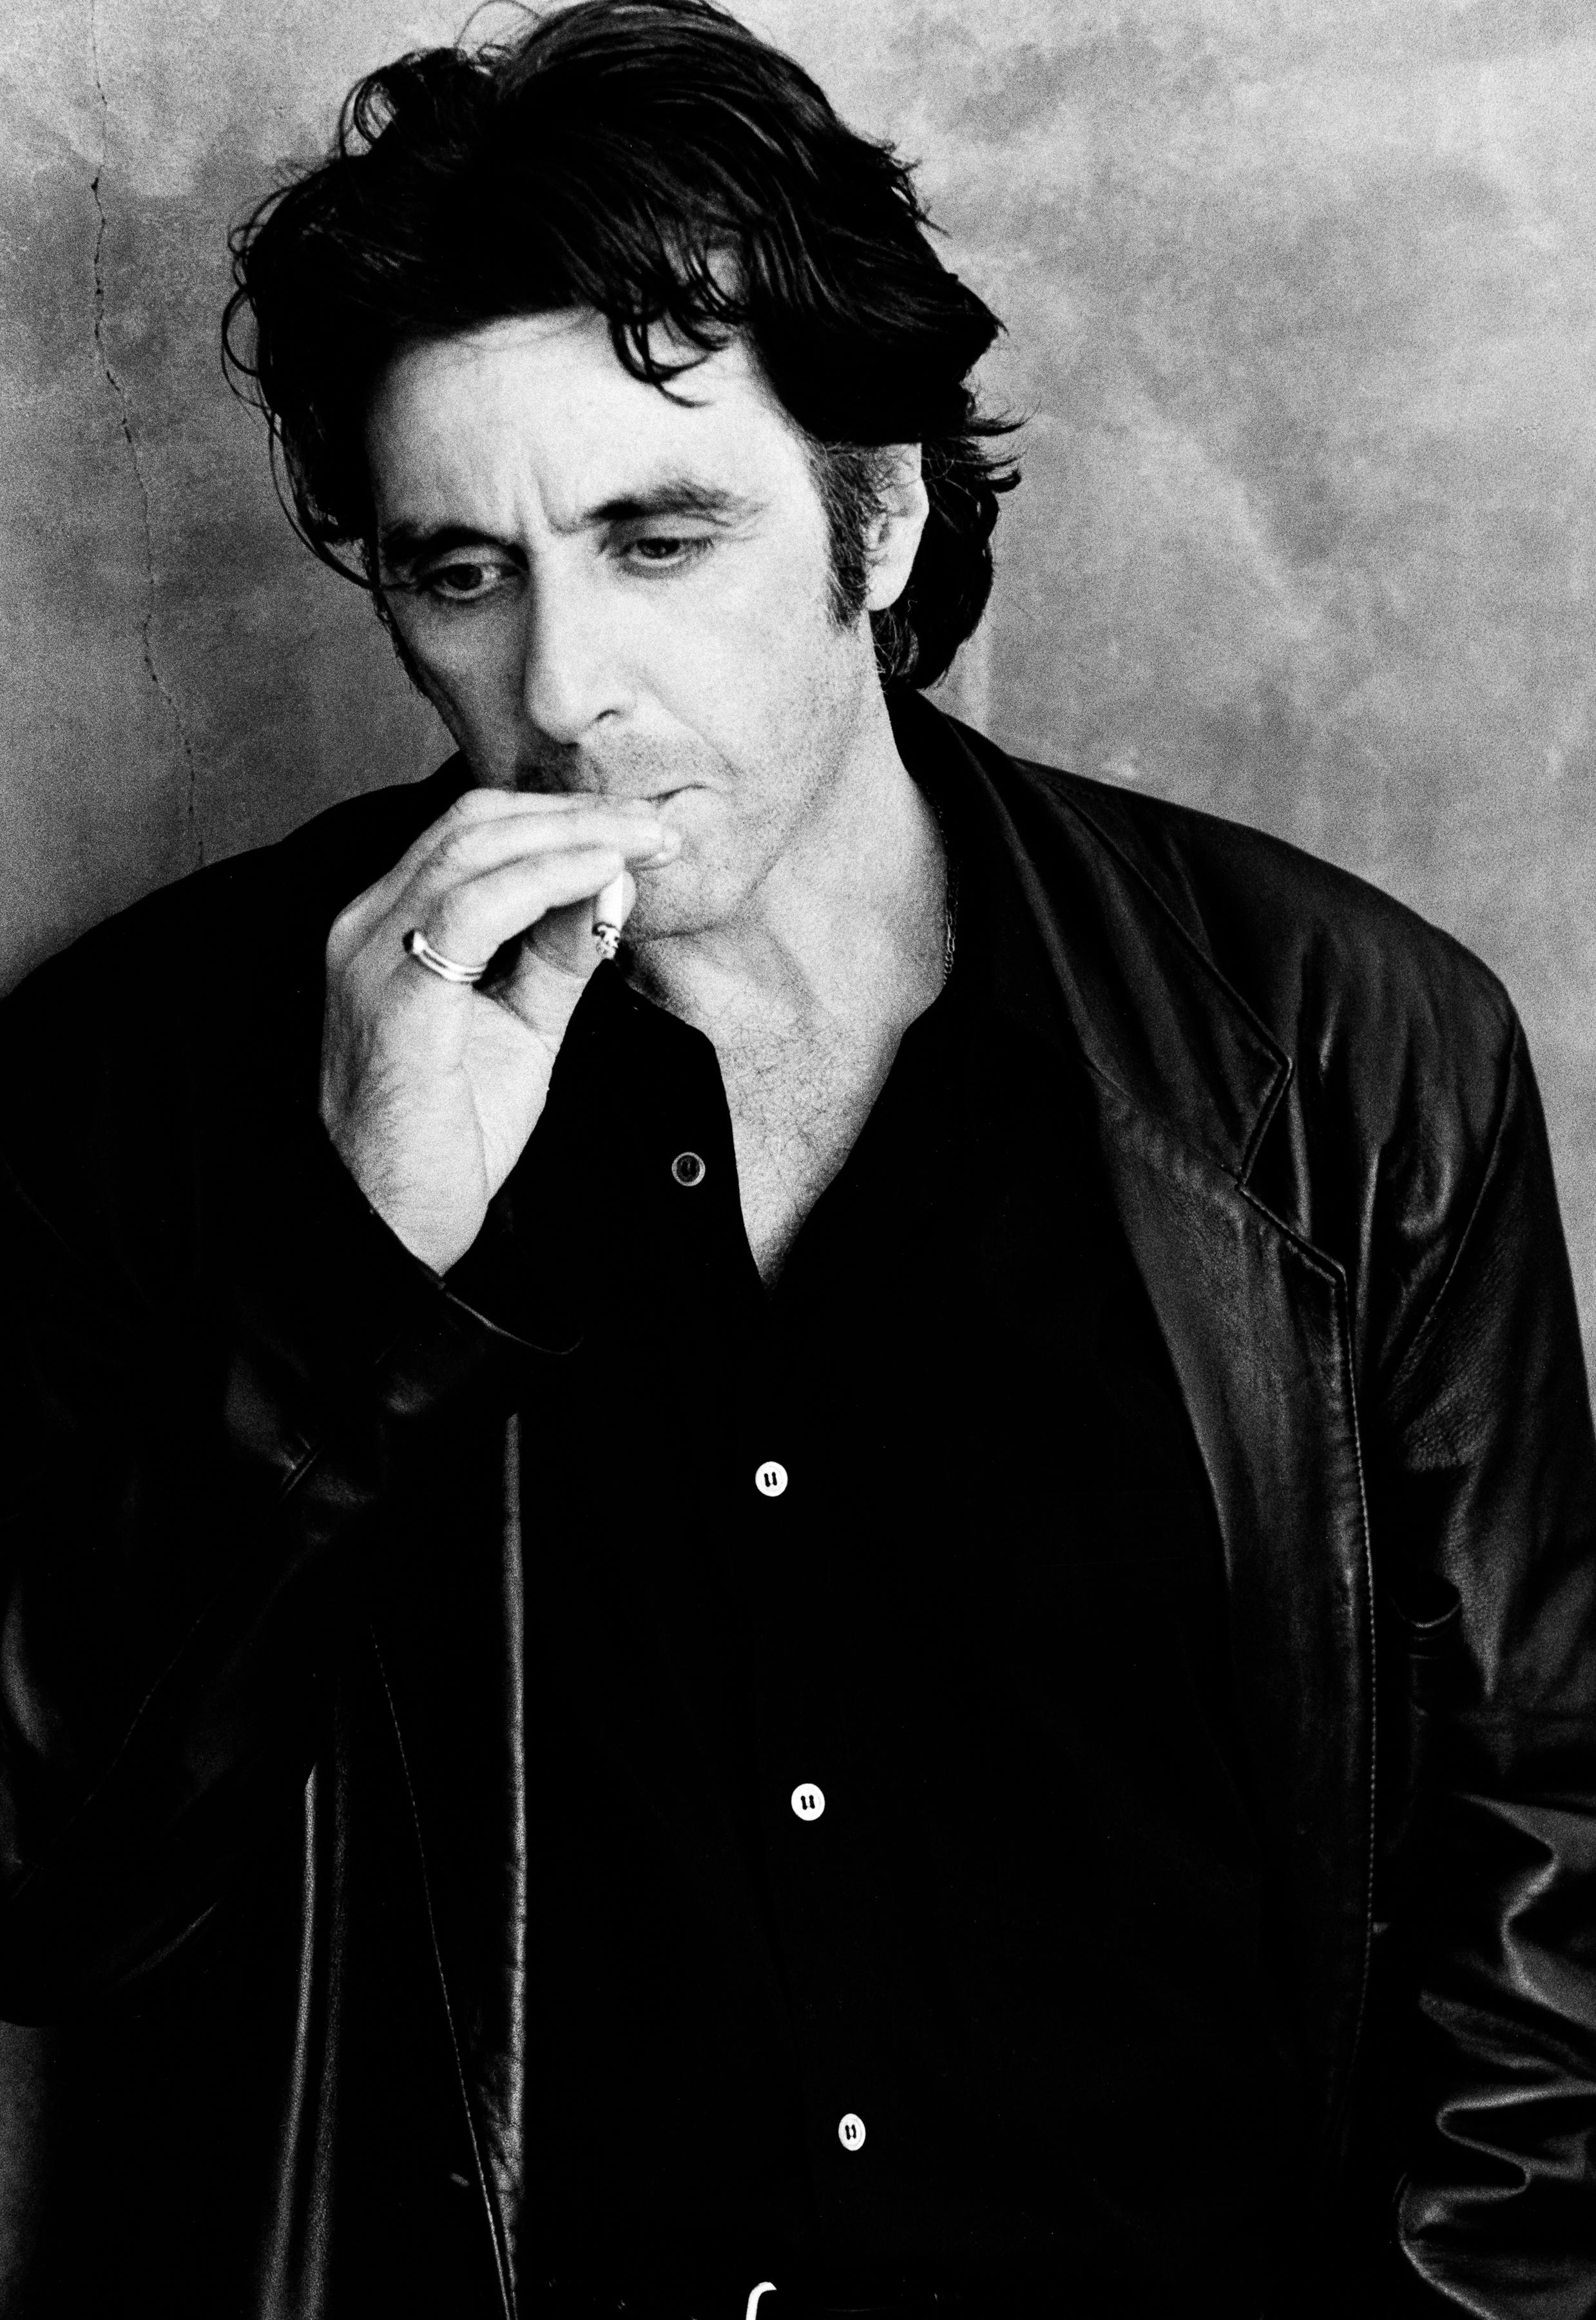 Greg Gorman Portrait Photograph - Al Pacino Smoking, 21st Century, Contemporary, Celebrity, Photography